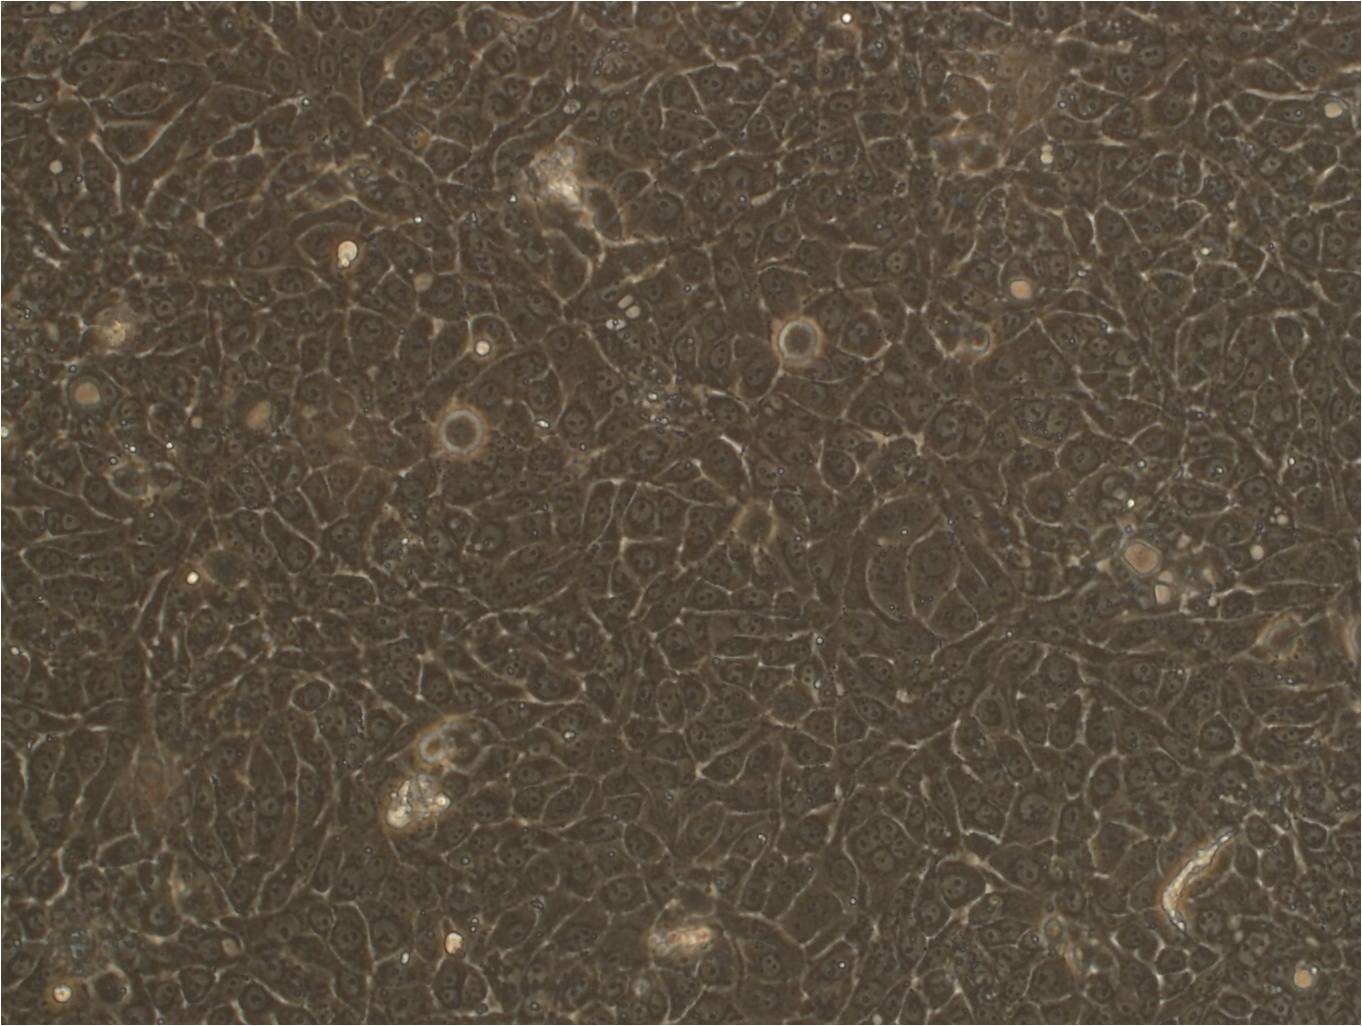 SGC-996 epithelioid cells人胆囊癌细胞系,SGC-996 epithelioid cells